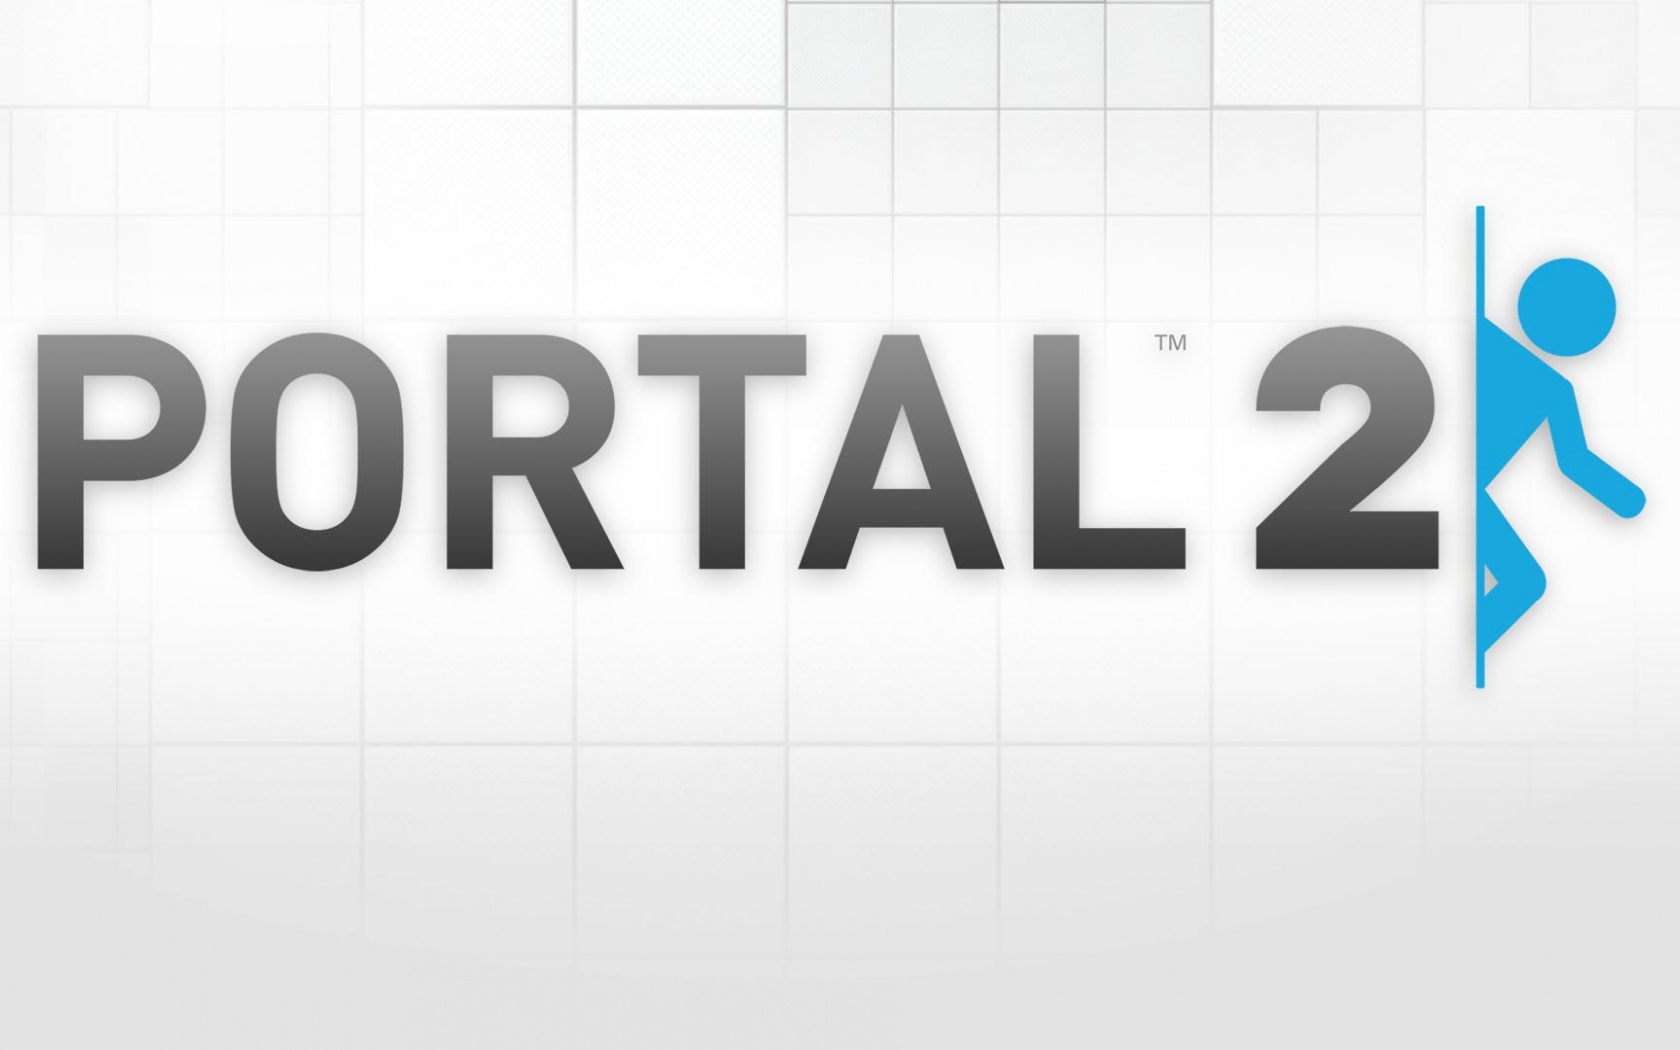 Portal 2 White Computer